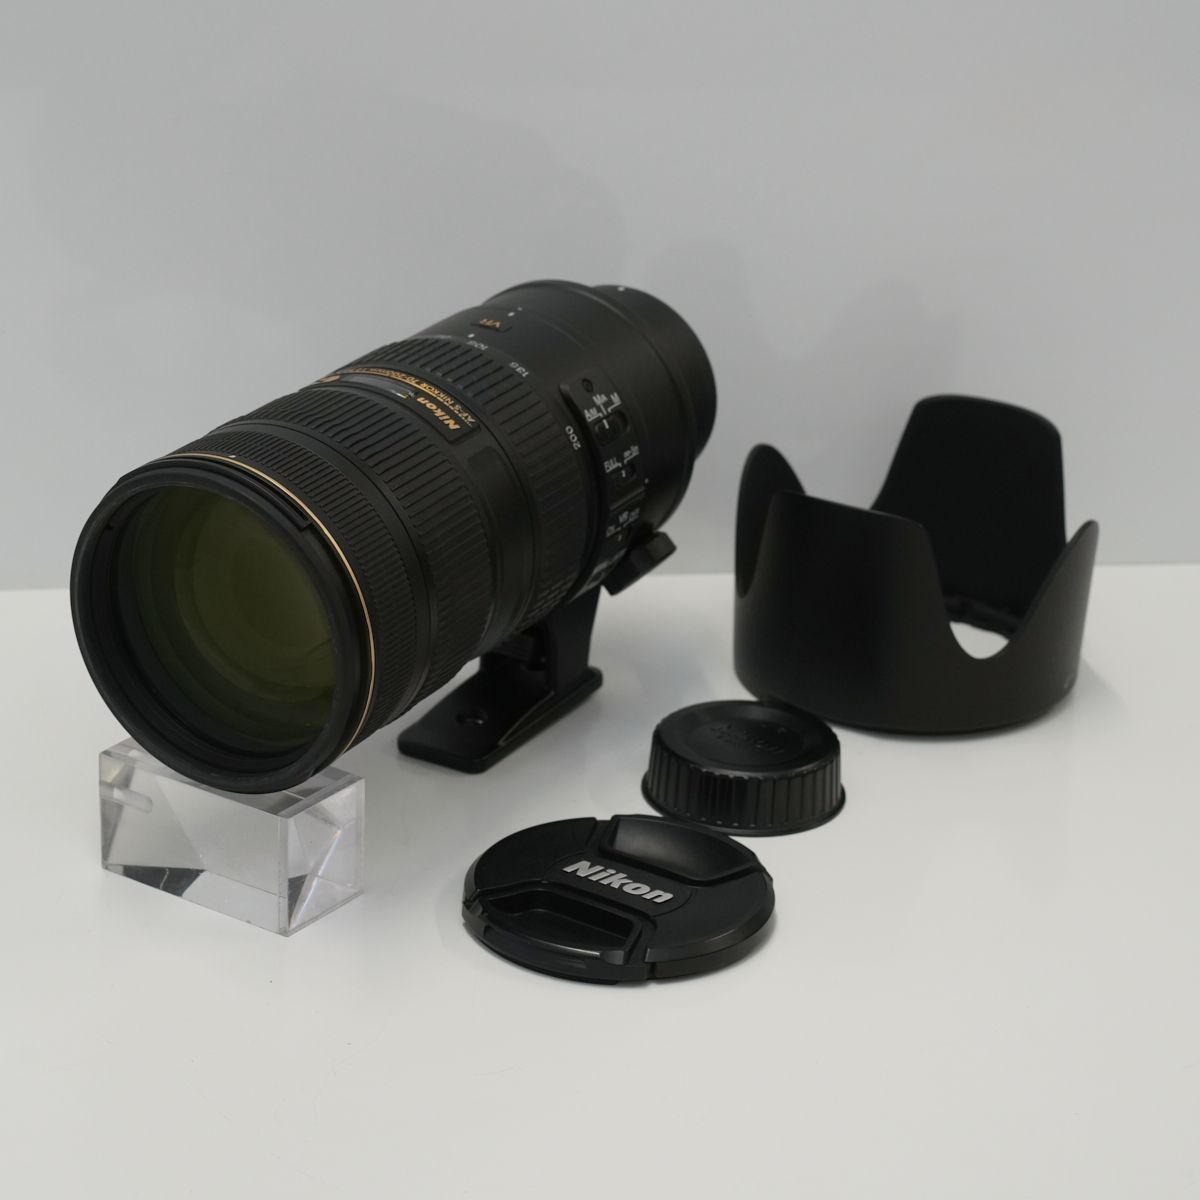 AF-S NIKKOR 70-200mm f/2.8G ED VR II Nikon 交換レンズ USED超美品 フルサイズ 望遠ズーム 手ブレ補正 FX 完動品  CE3319